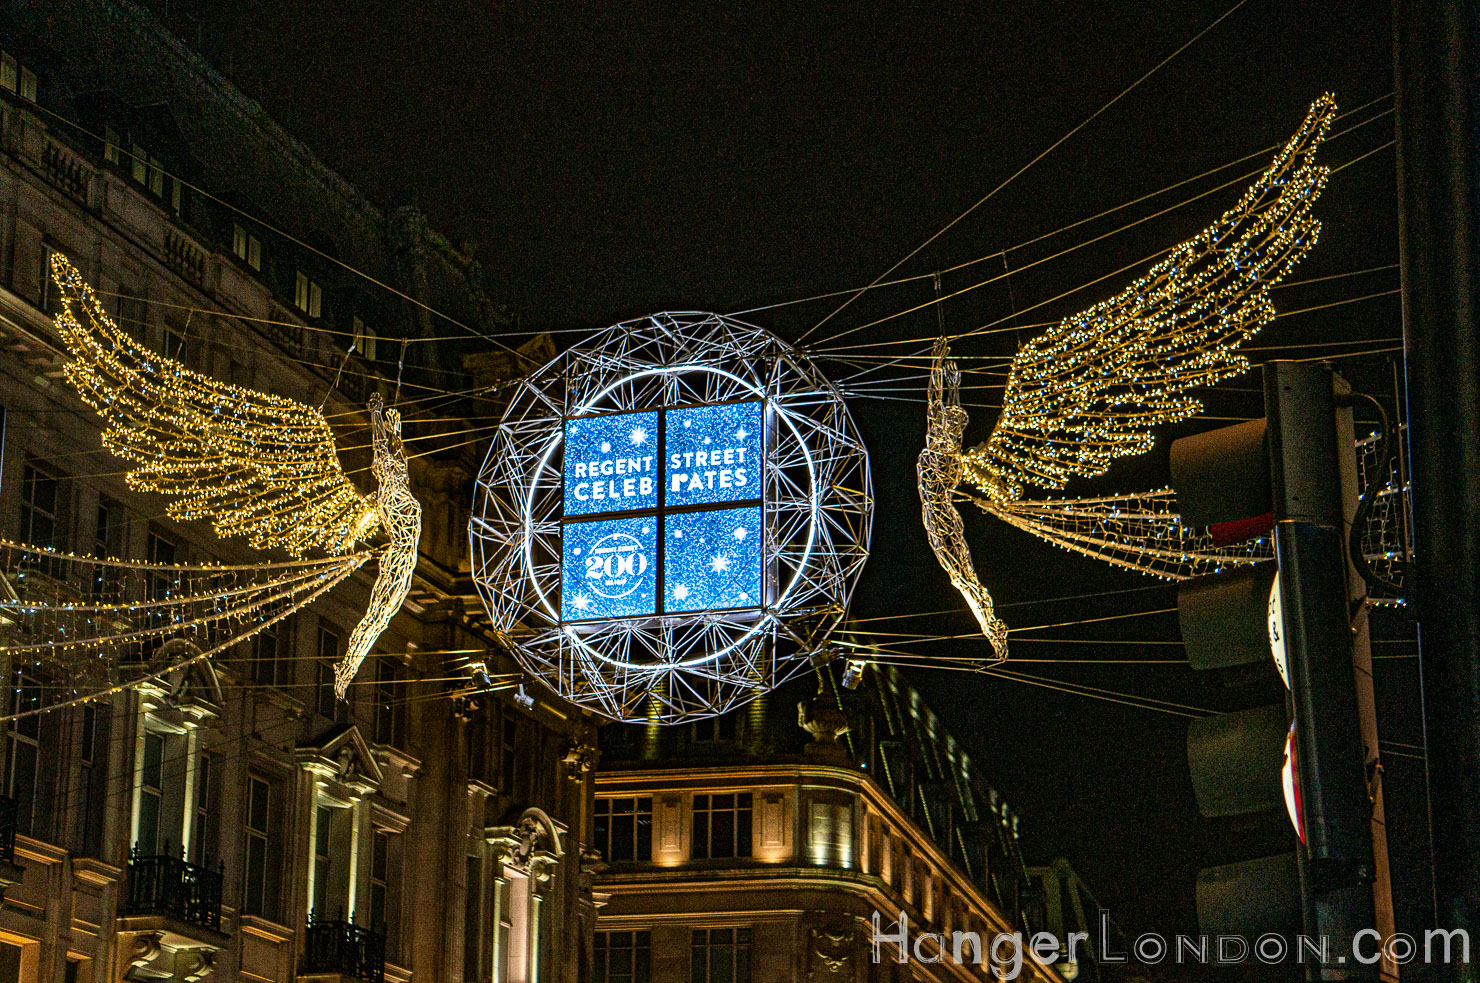 Regent St 200 years Christmas Lights